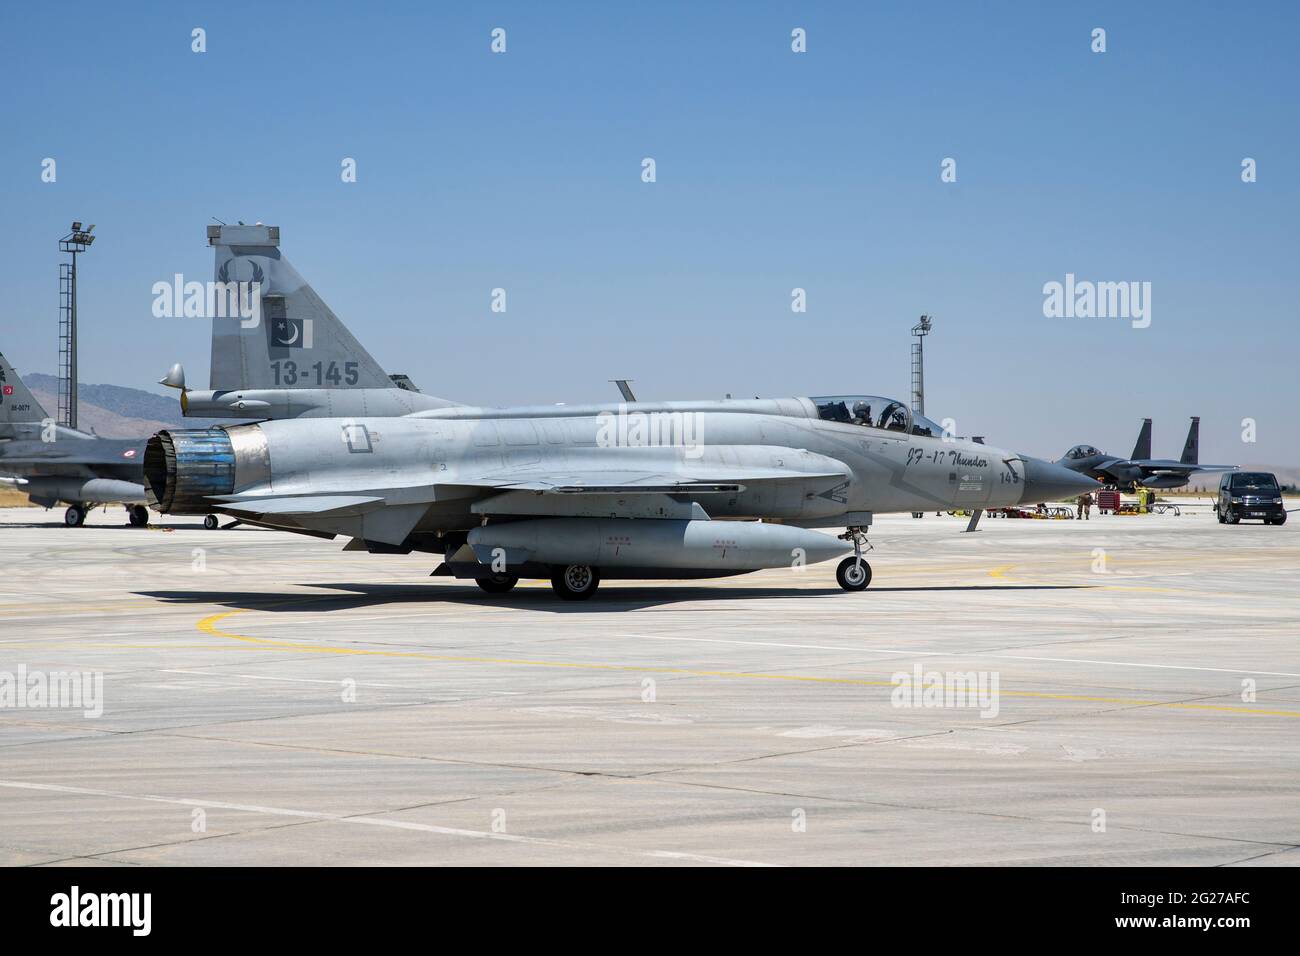 A Pakistan Air Force JF-17 Thunder. Stock Photo